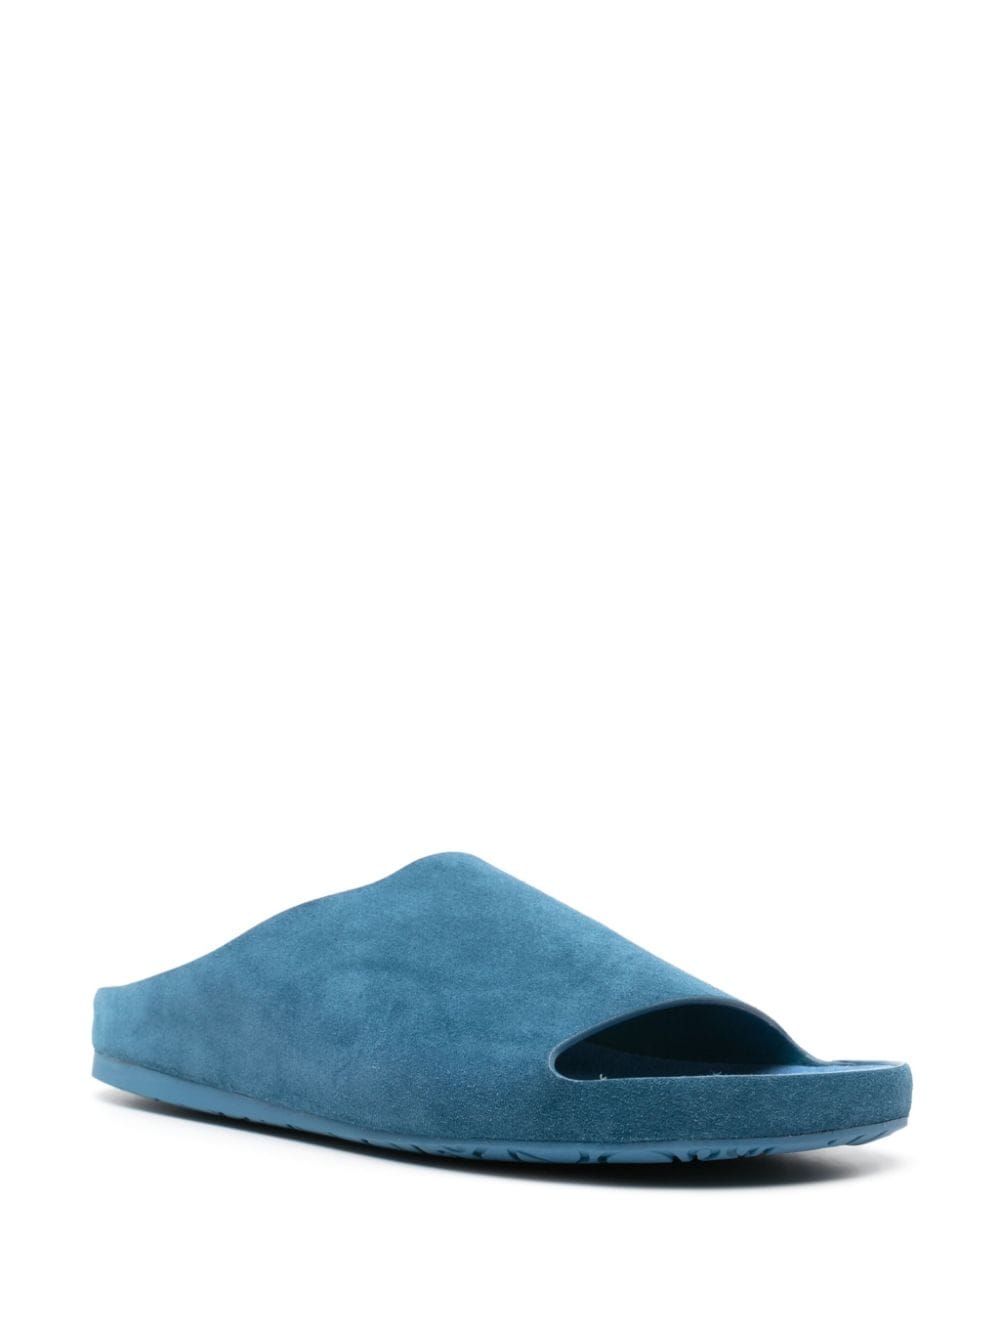 LOEWE Lago suede sandals - Blauw